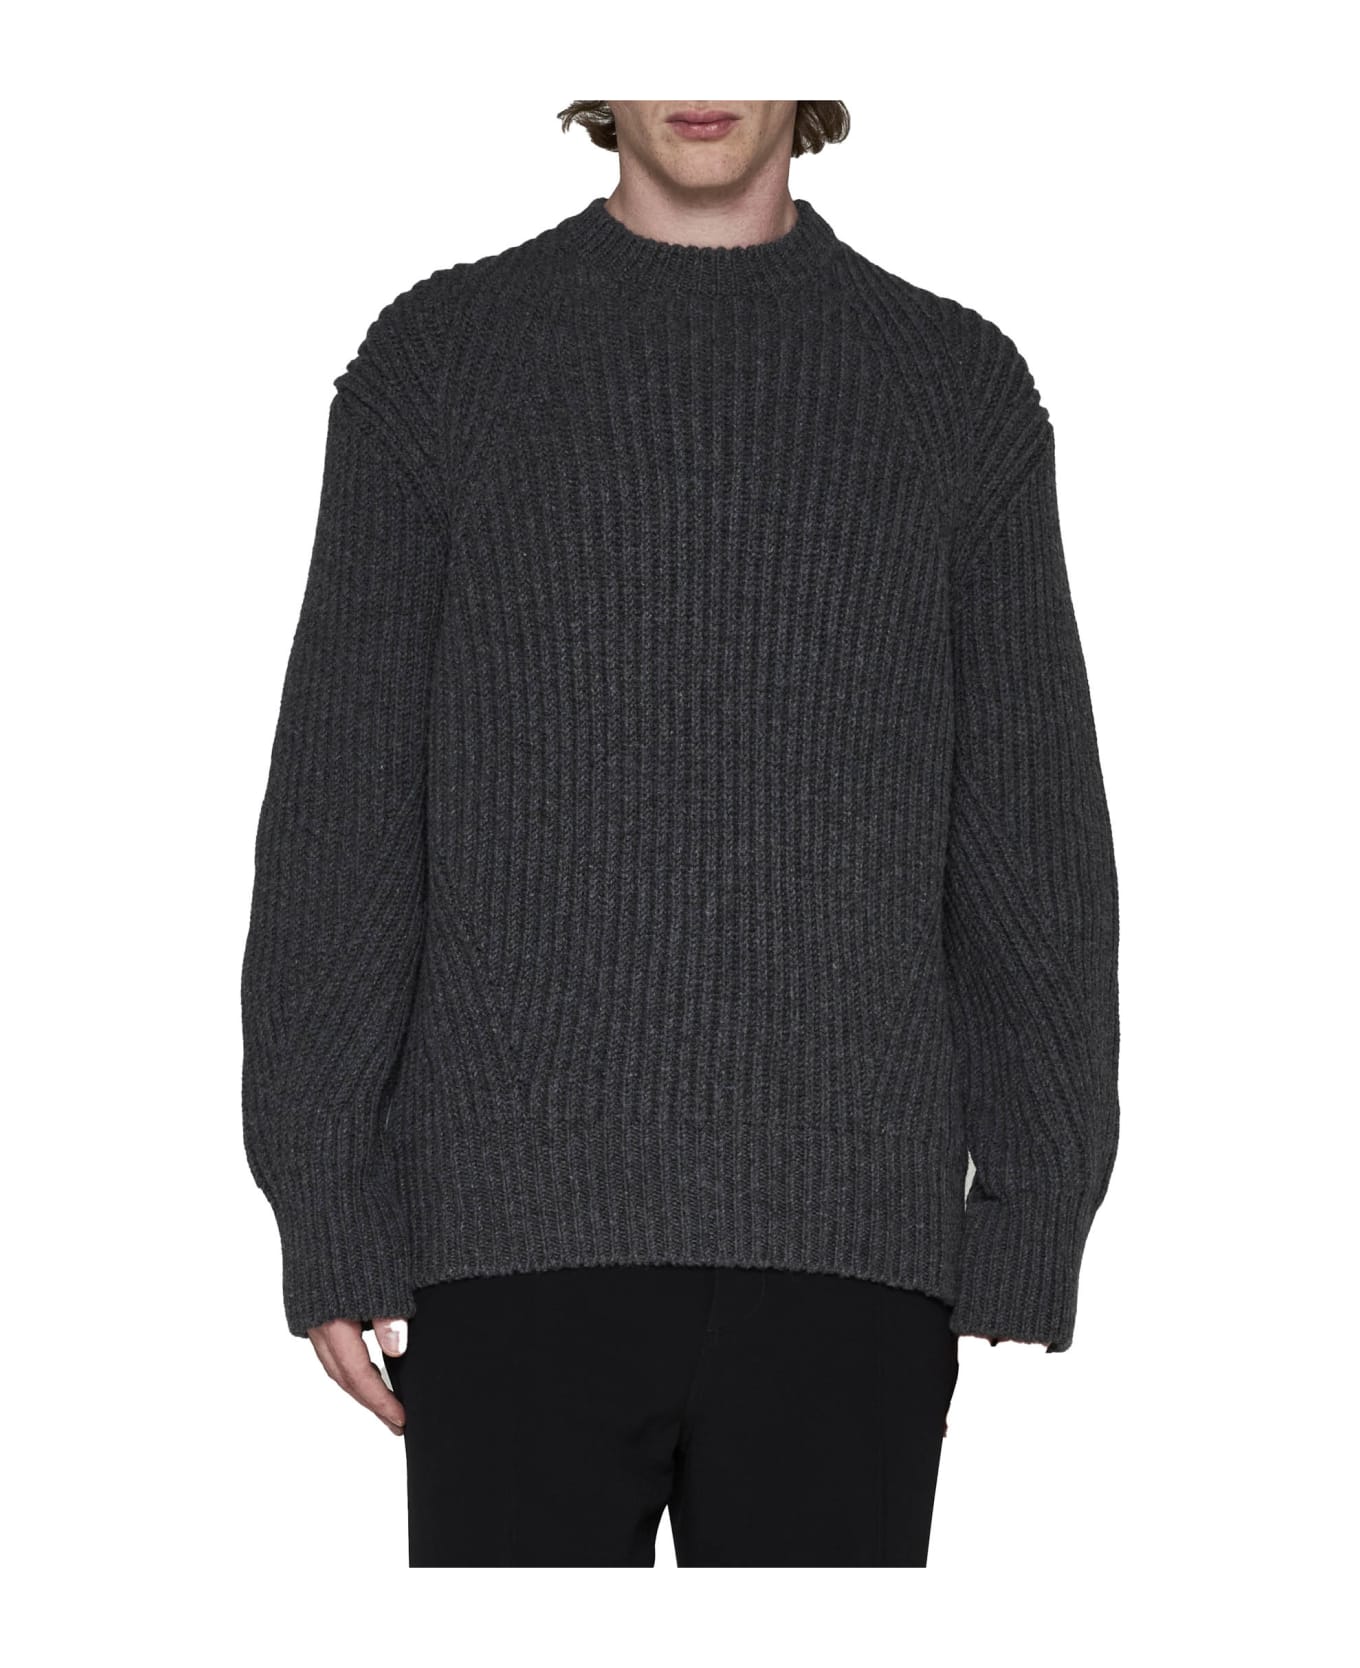 Alexander McQueen Crewneck Rib Knit Sweater - Charcoal ニットウェア